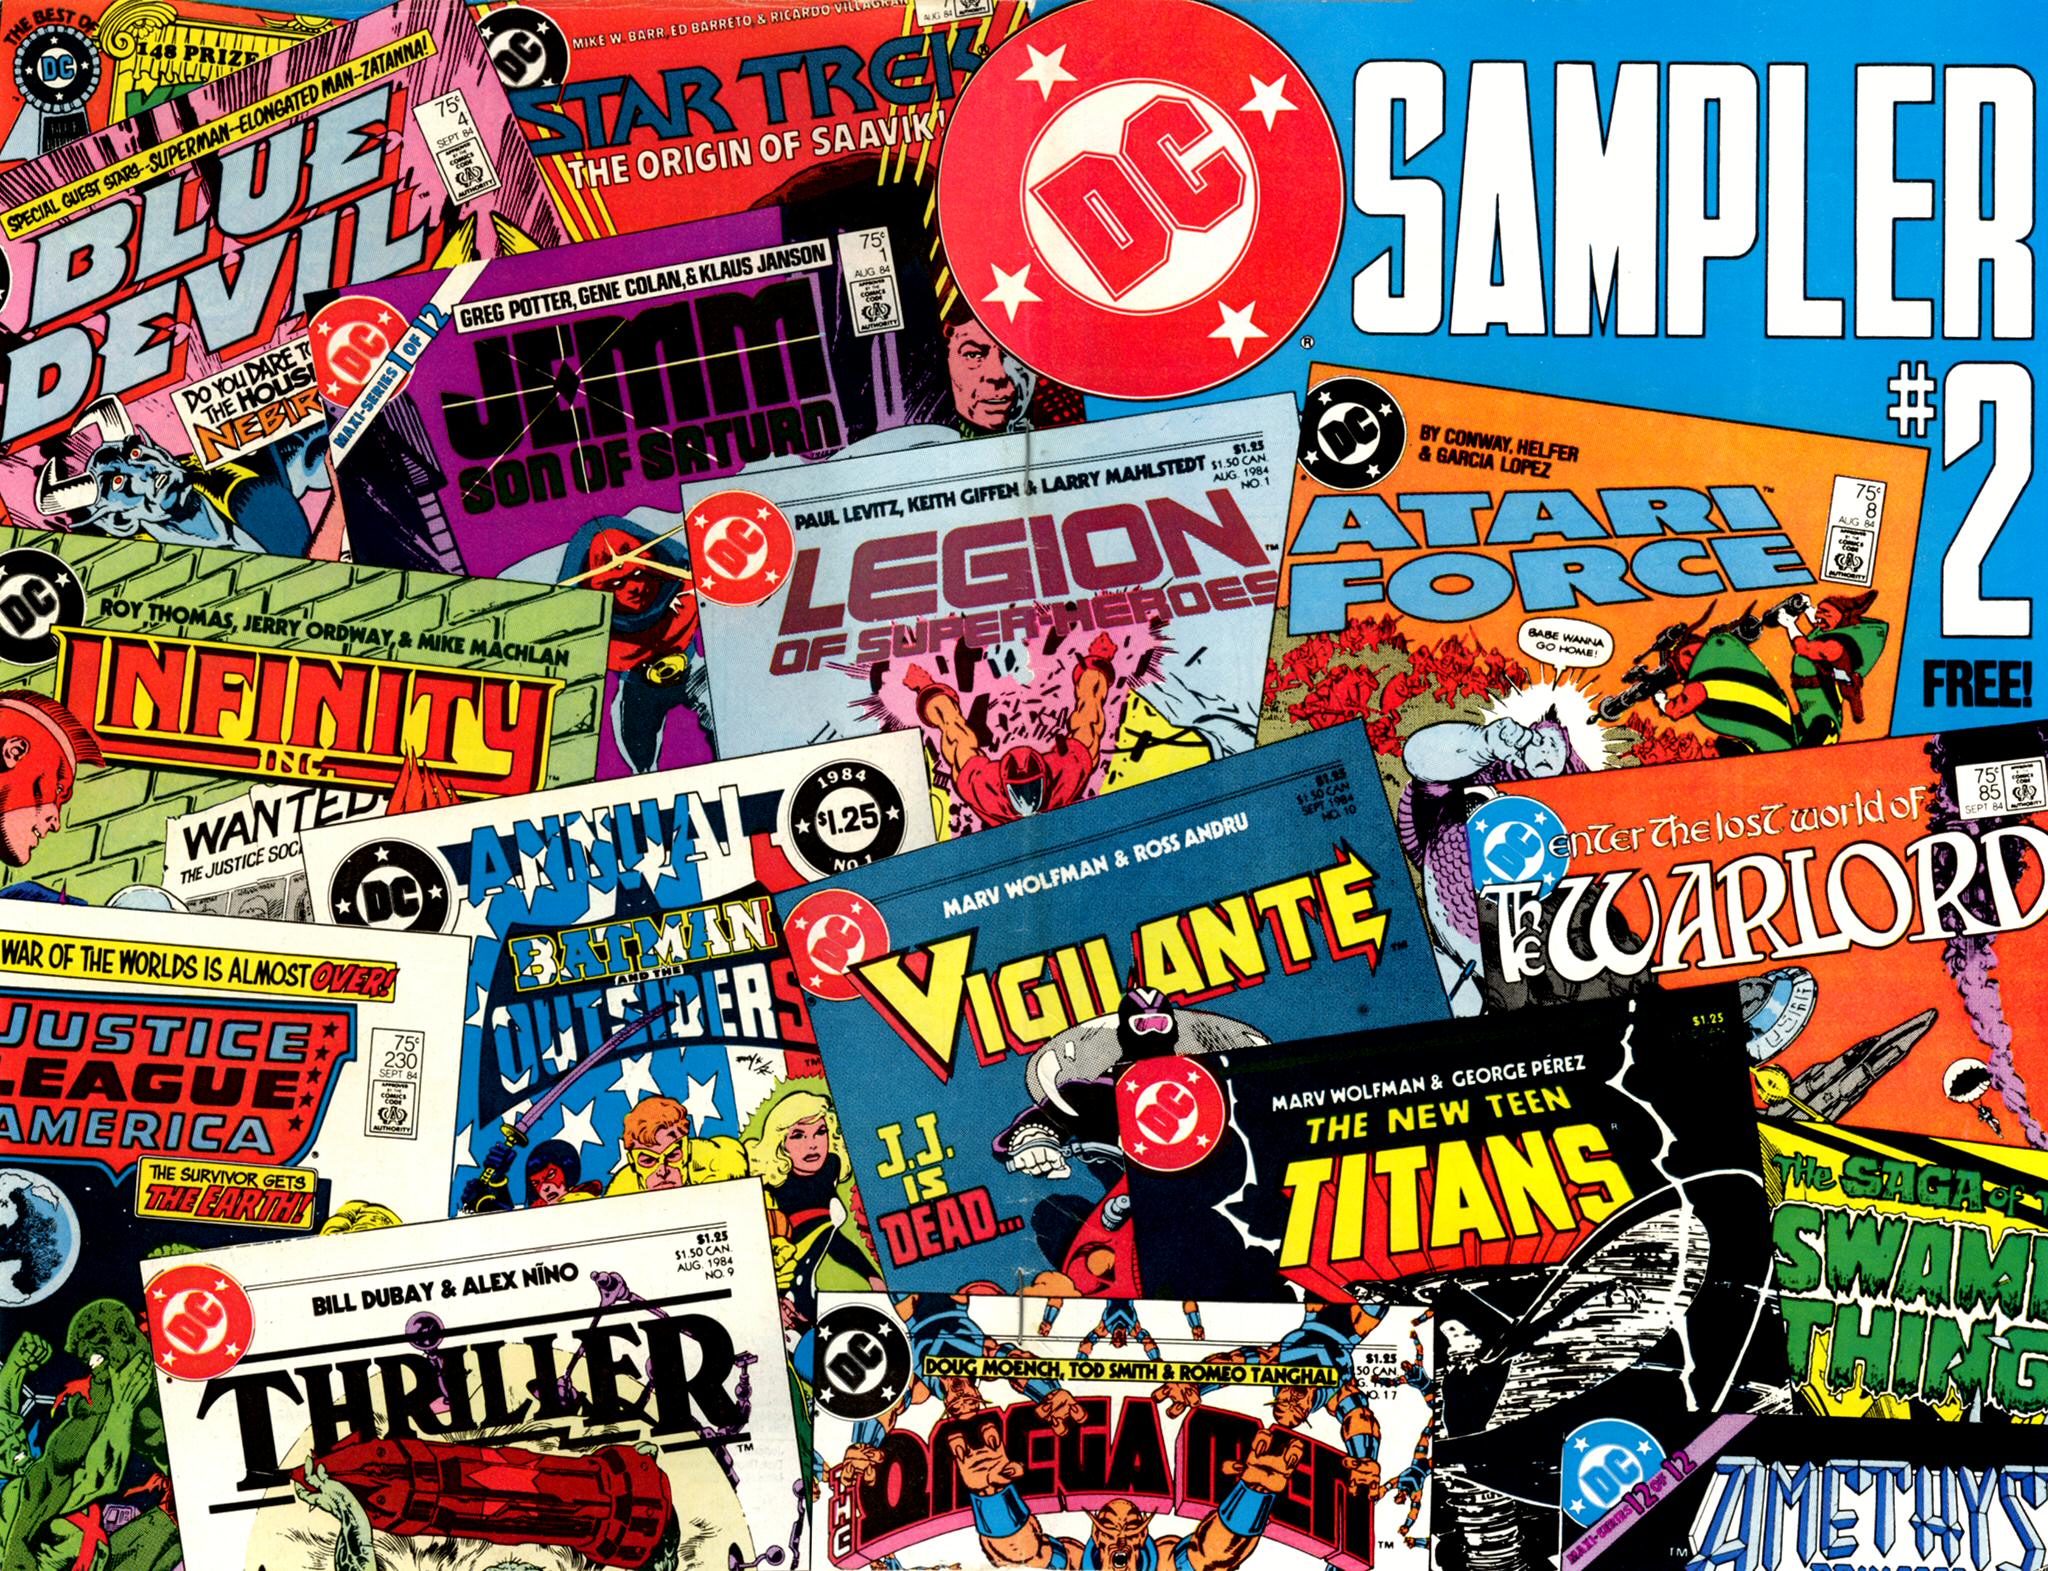 DC Sampler #2 cover from 1984